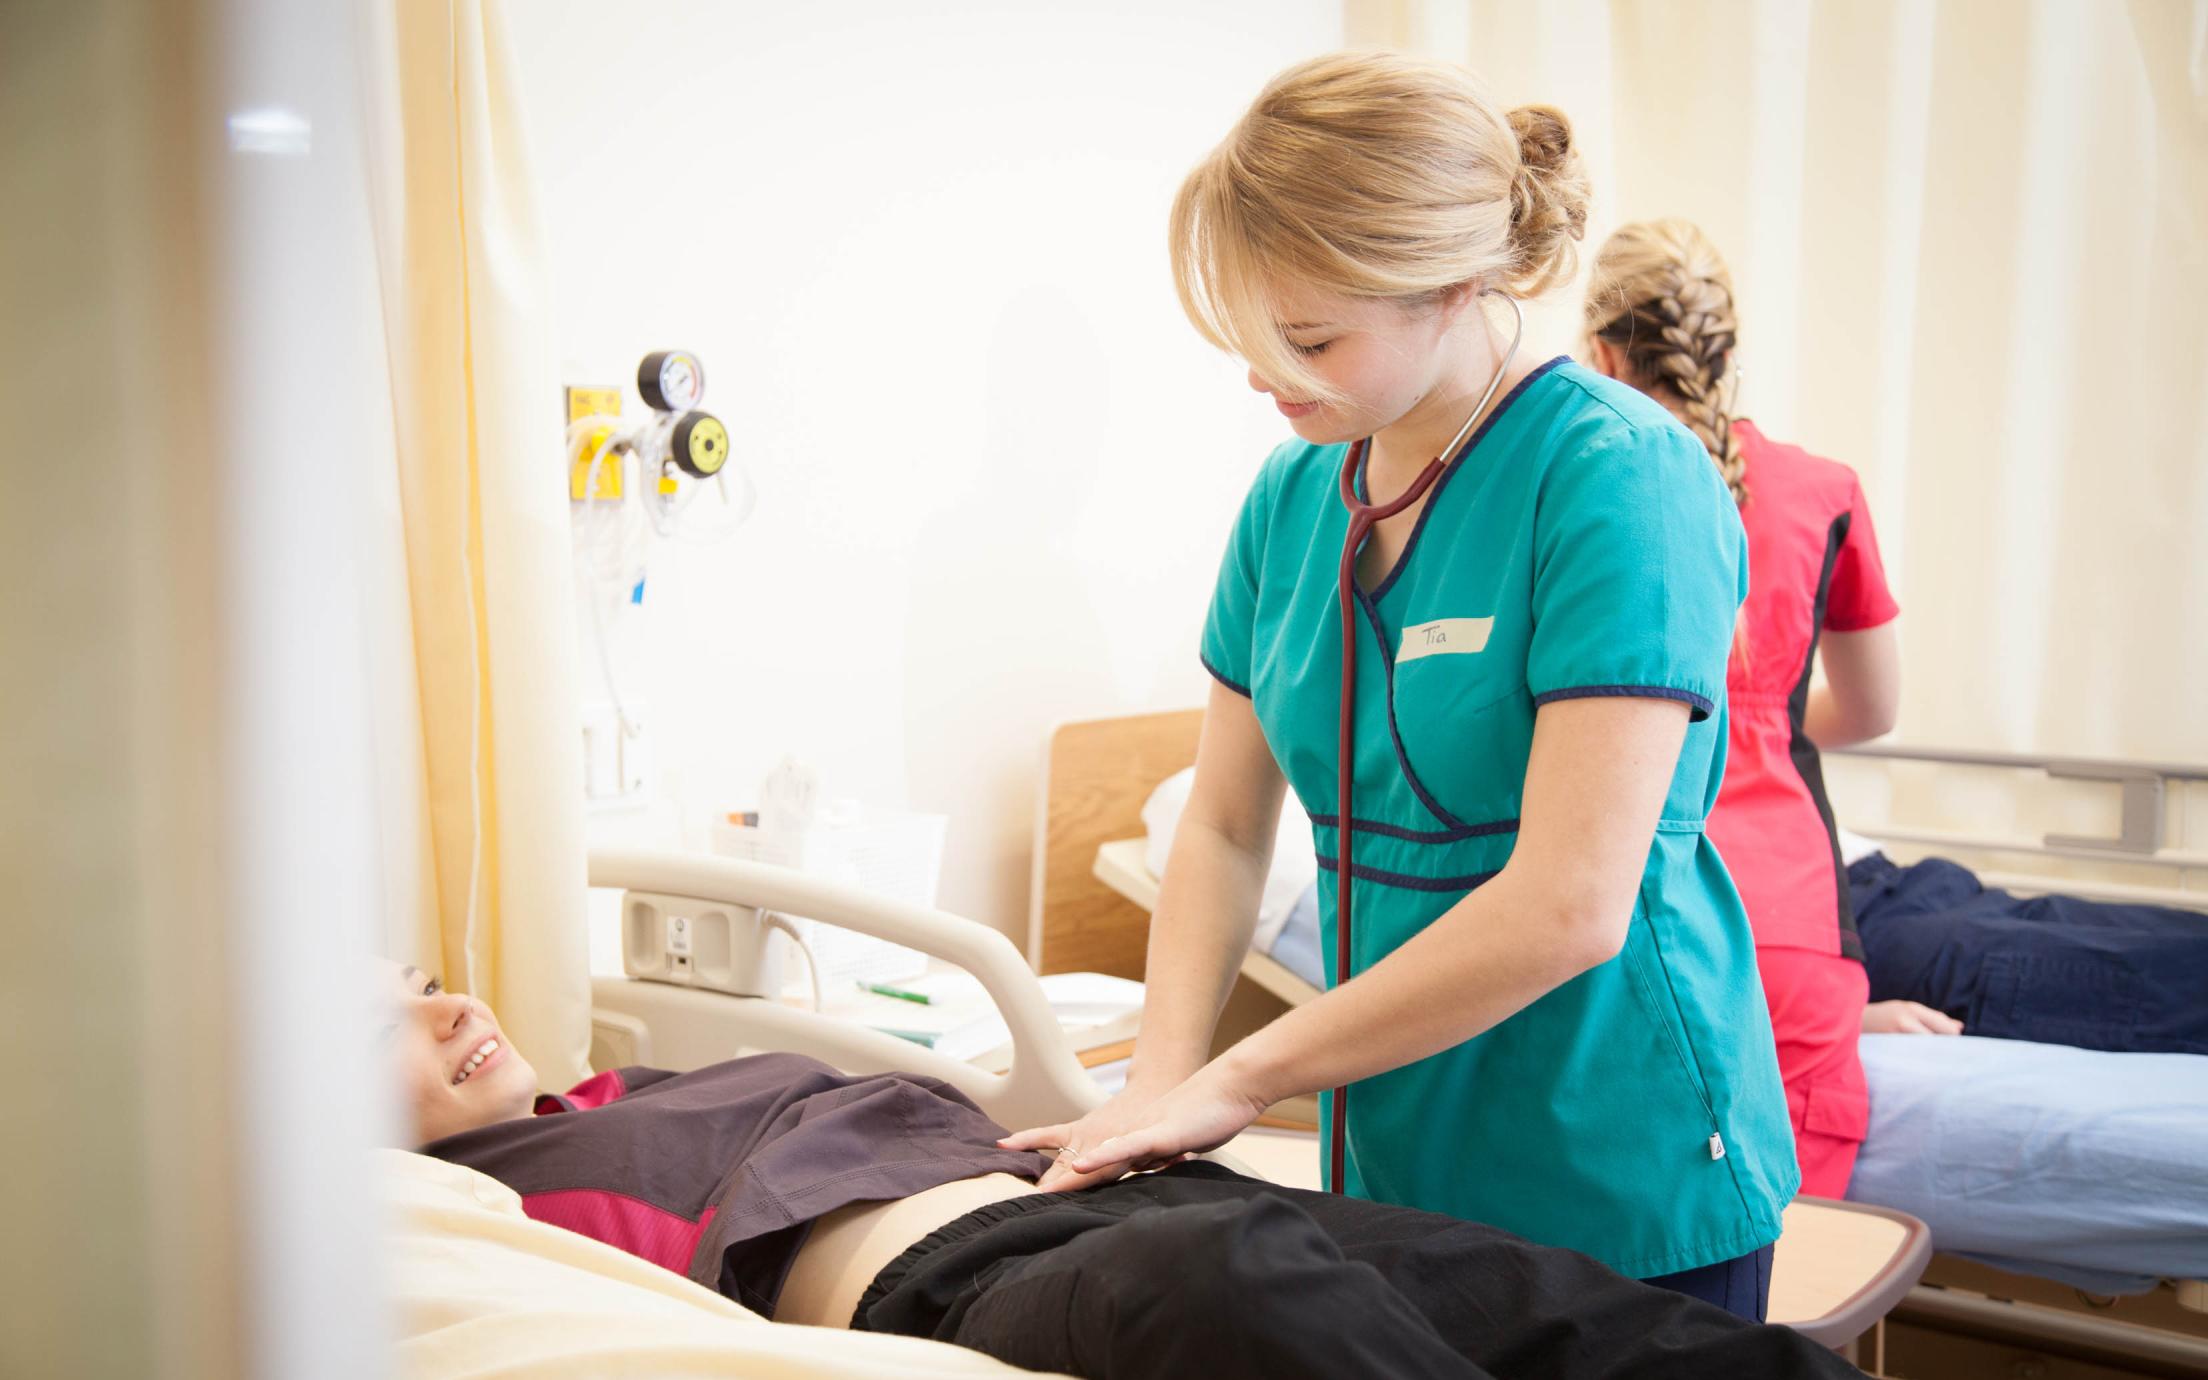 A BSN Student examining a patient in VIU's BC Nursing Program